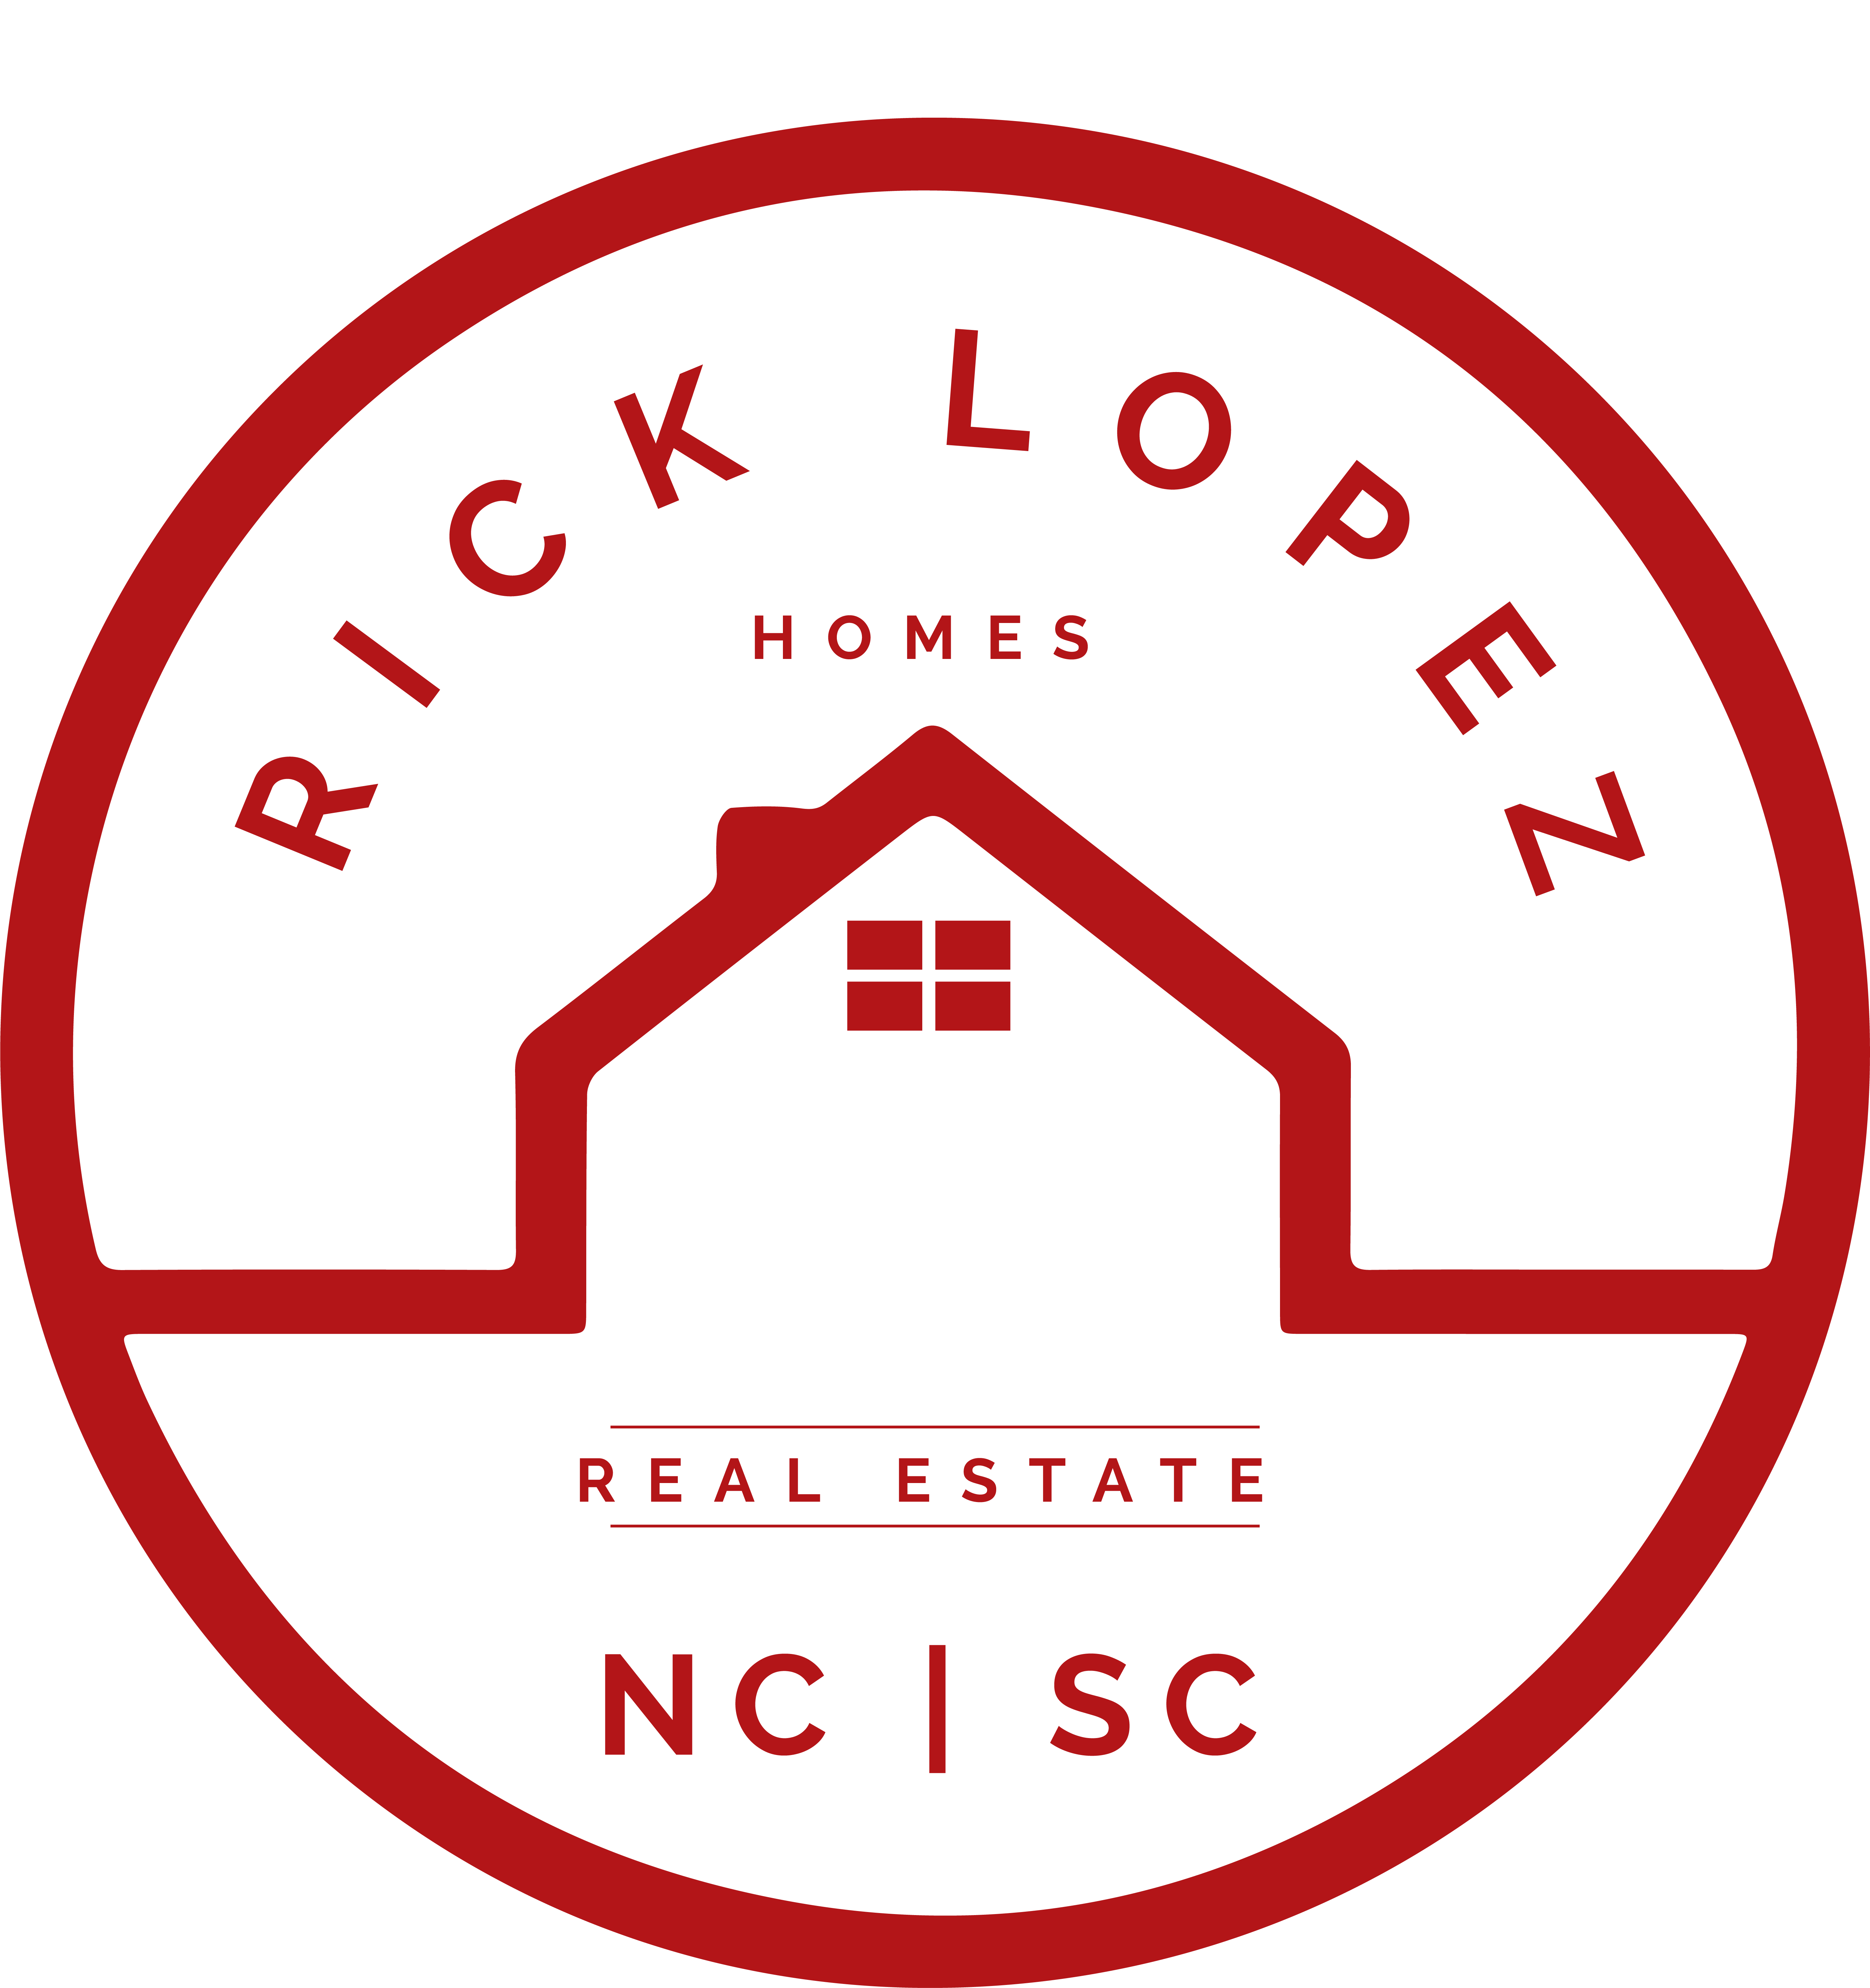 Rick Lopez Homes